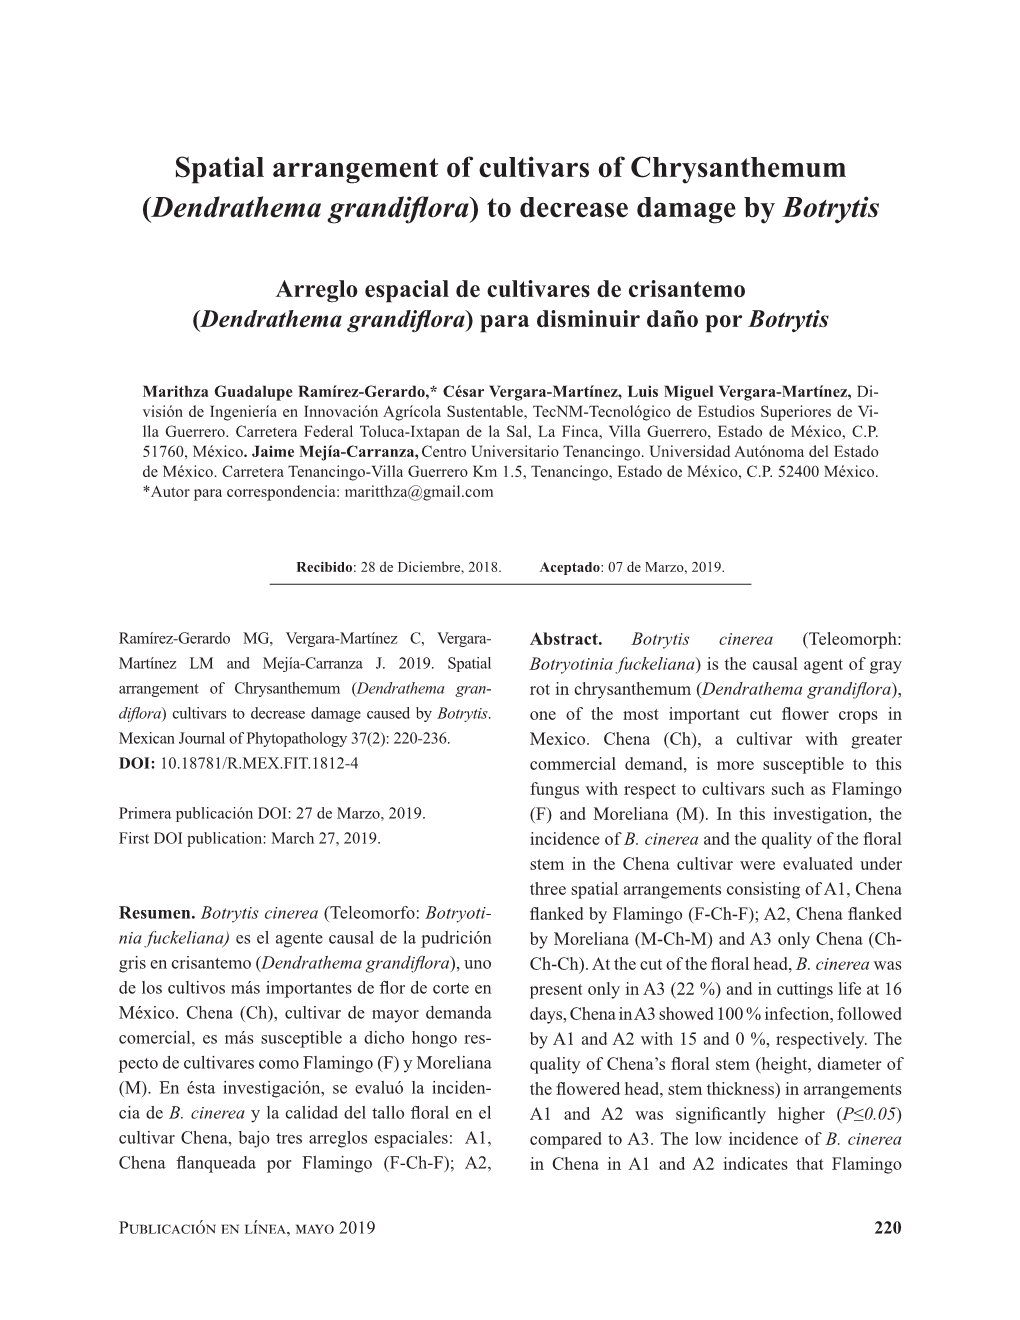 Spatial Arrangement of Cultivars of Chrysanthemum (Dendrathema Grandiflora) to Decrease Damage by Botrytis